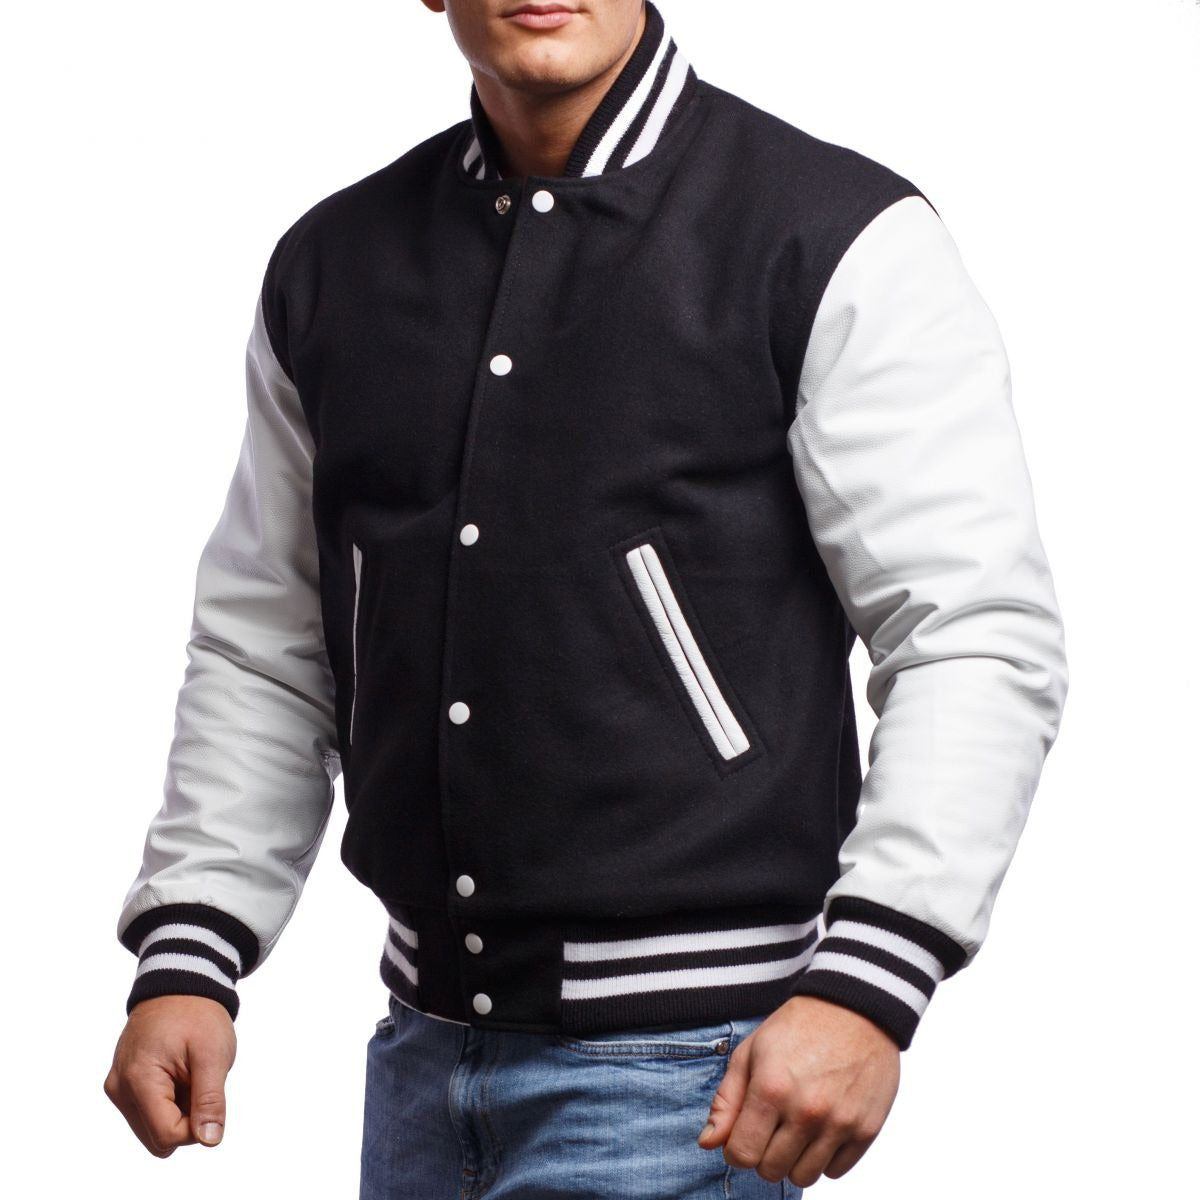 Men's Black Wool Body & Bright White Leather Sleeves Letterman Jacket